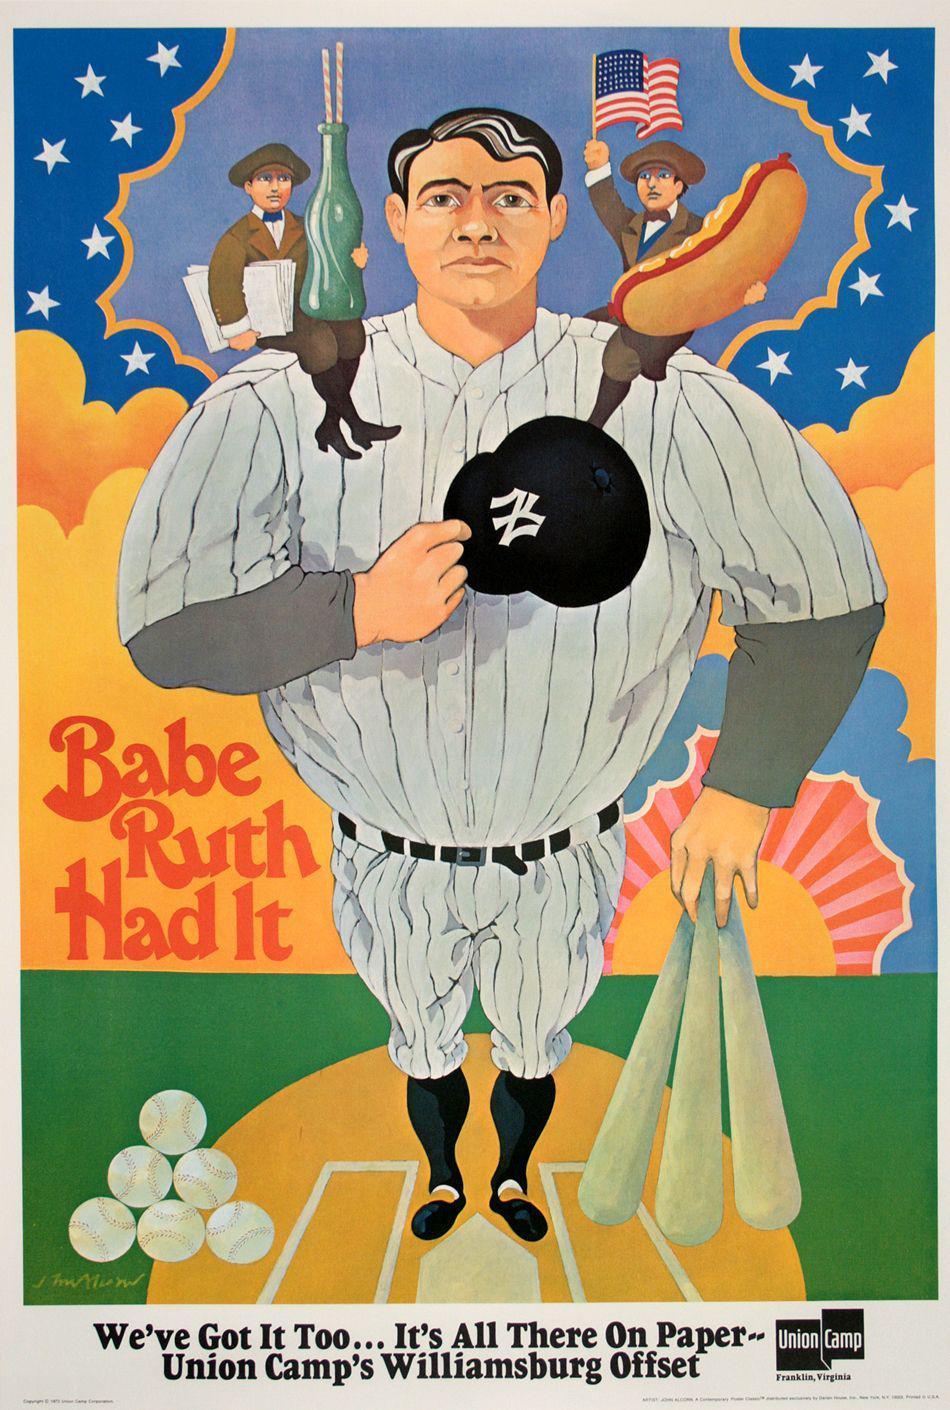 Original Vintage Poster 1971 Babe Ruth Had It by Alcorn Baseball